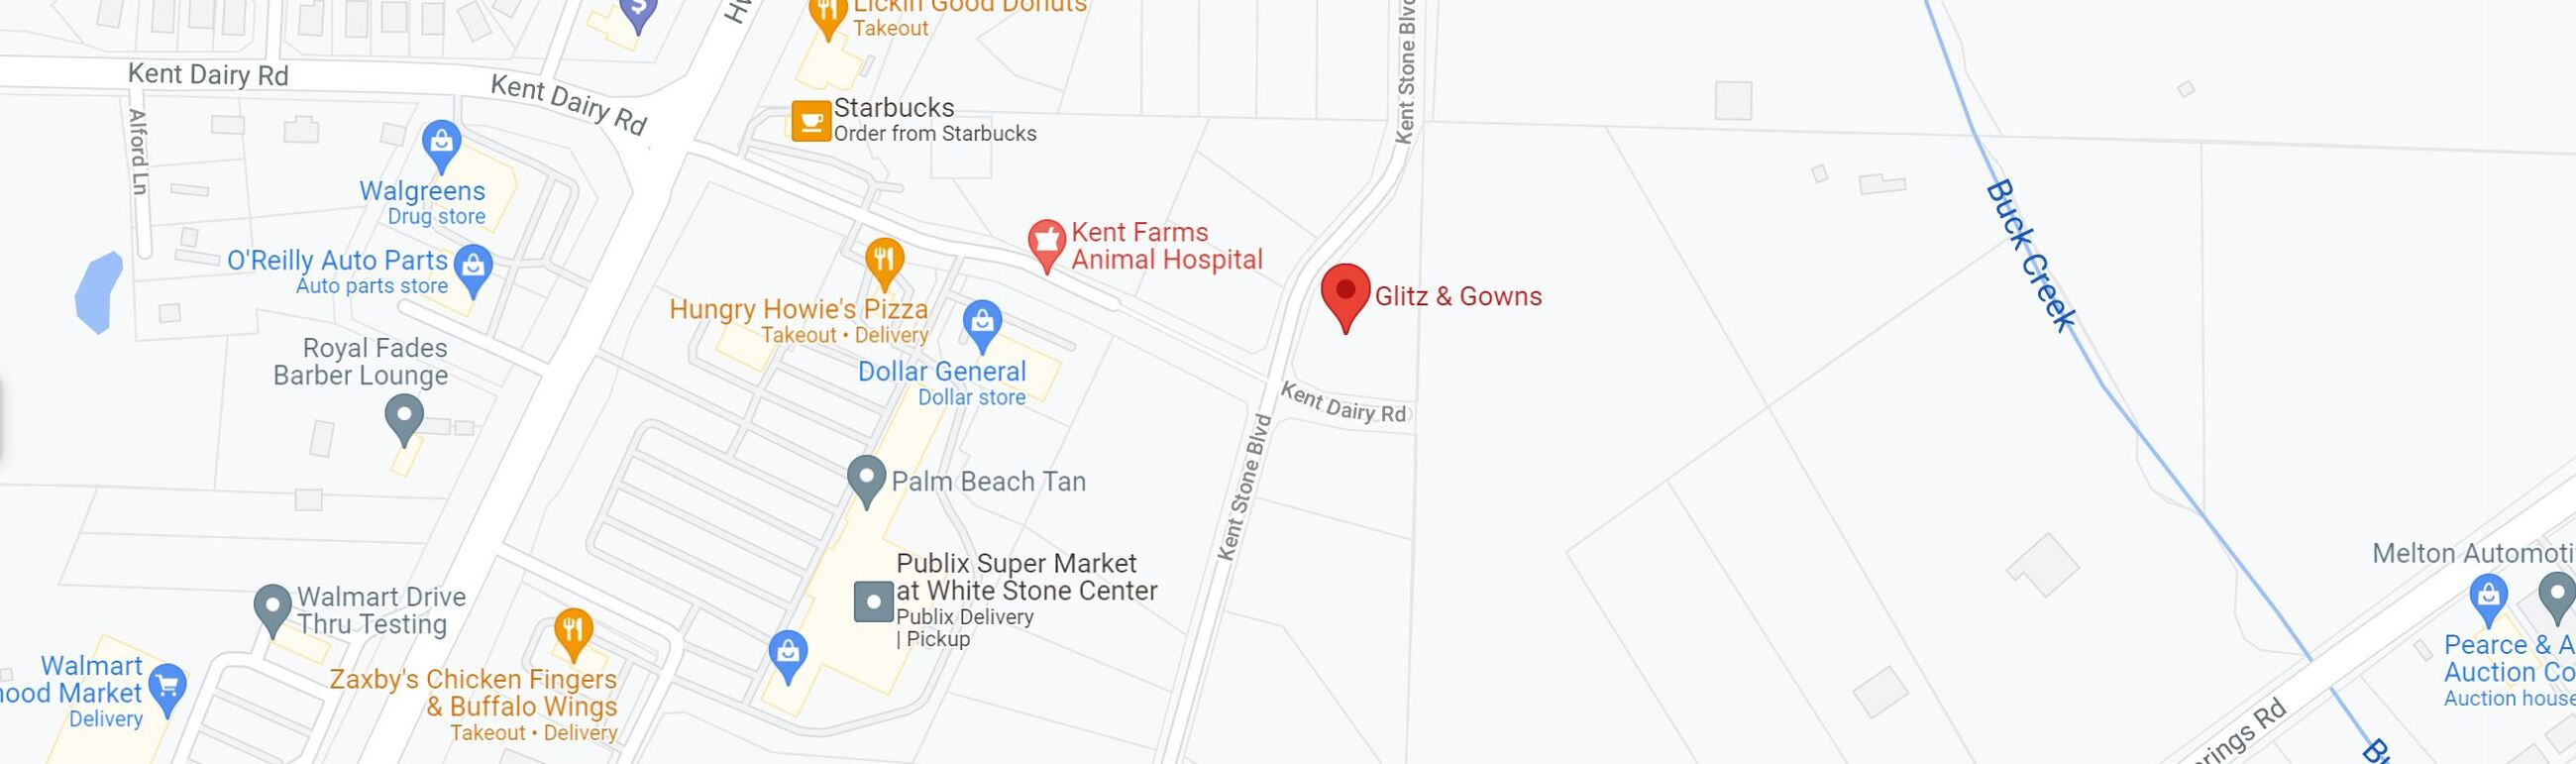 Glitz & Gowns location